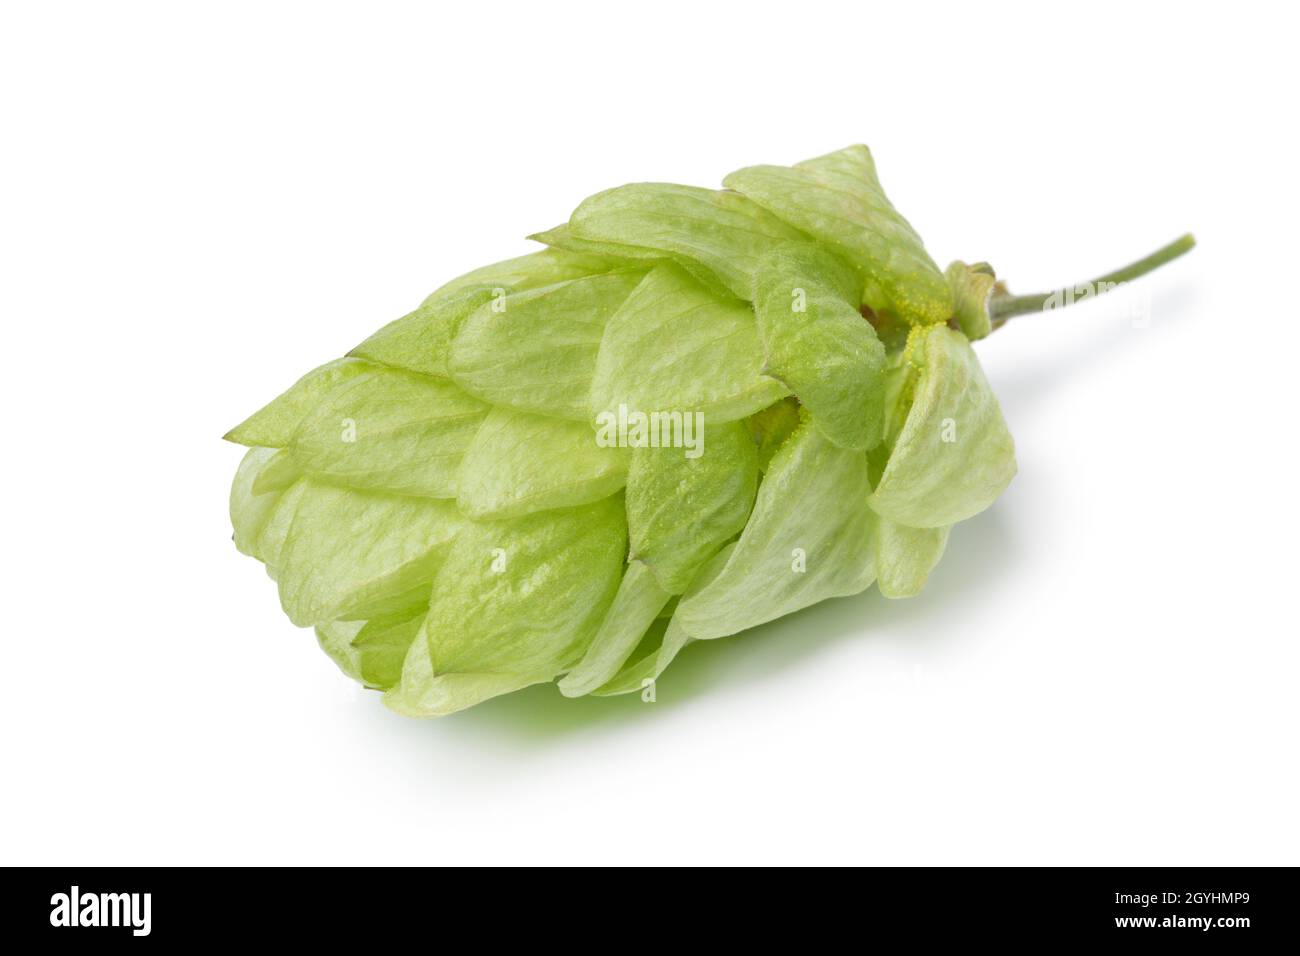 Single fresh green common hop fruit isolated on white background close up Stock Photo